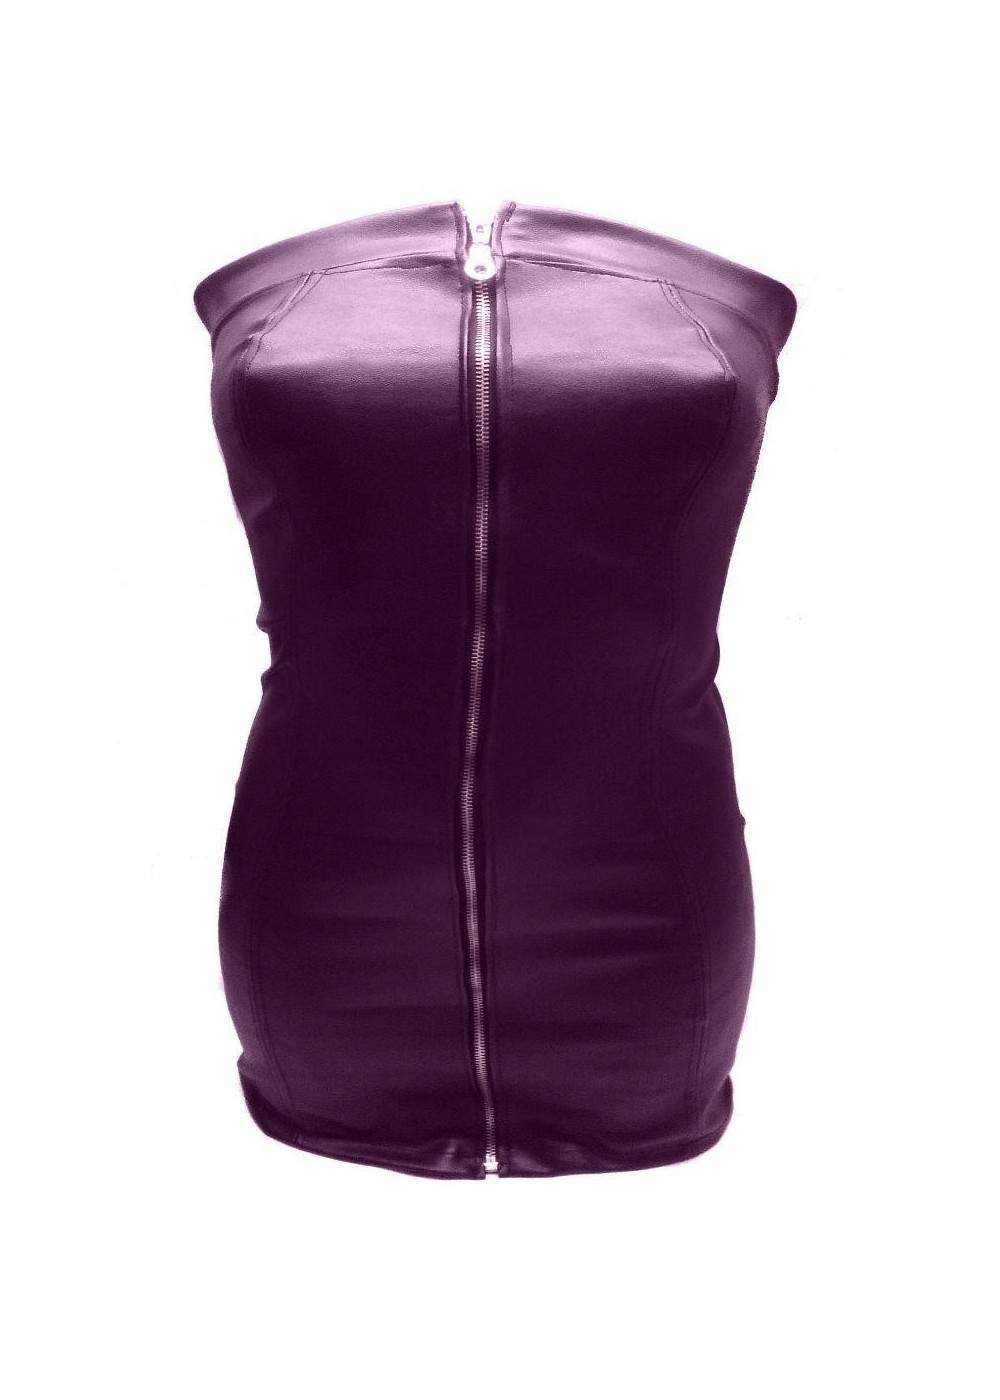 Designer leather dress purple size L - XXL (44 - 52) 35,00 € - 